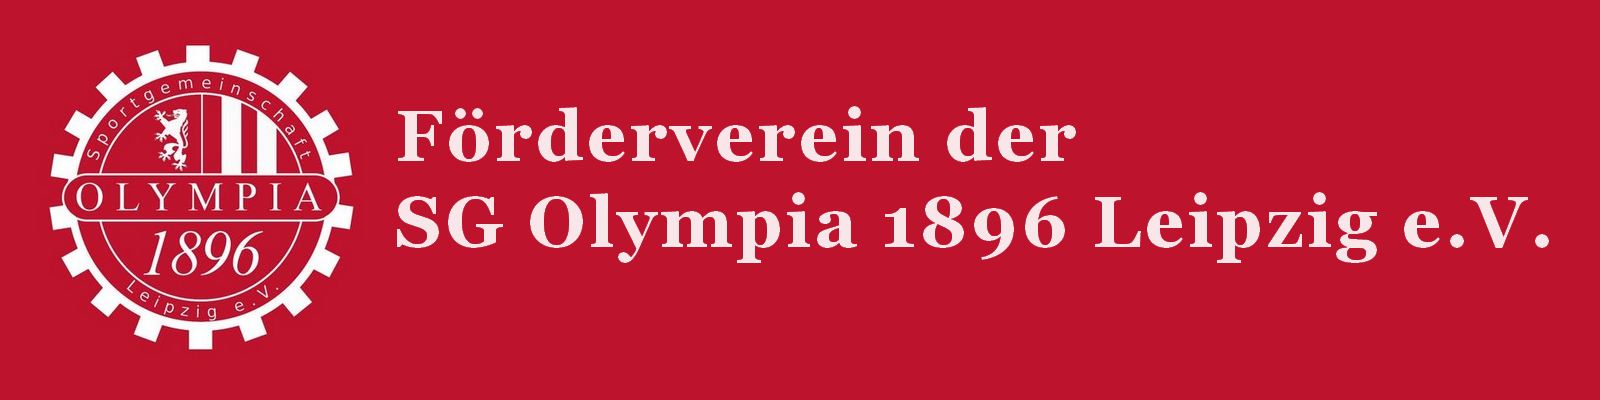 Förderverein der SG Olympia 1896 Leipzig e.V.